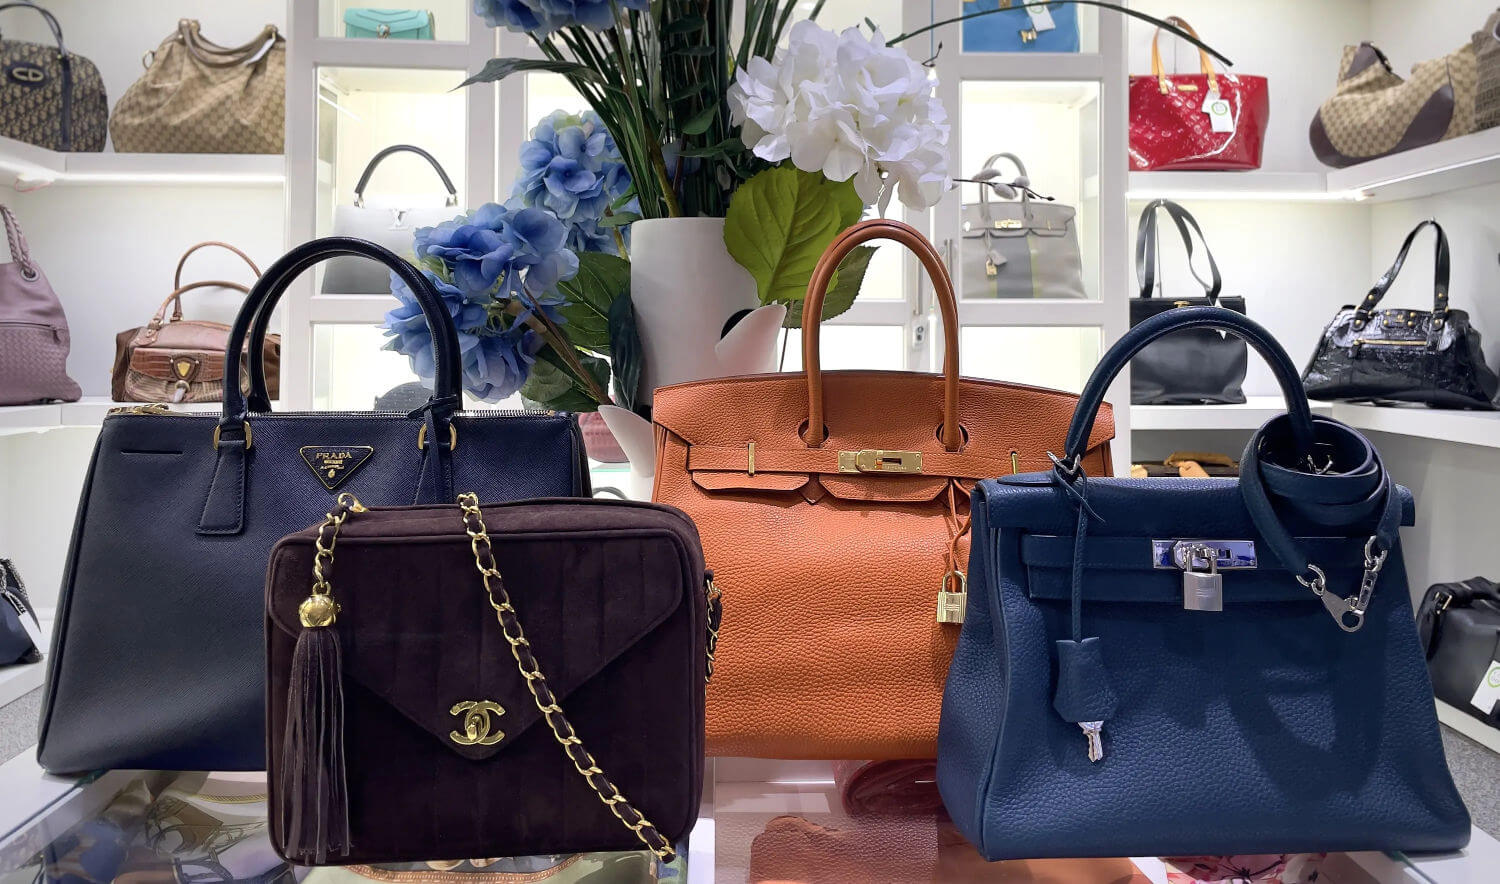 Louis Vuitton Navy Blue/Burgundy Leather Freedom Bag Louis Vuitton | The  Luxury Closet